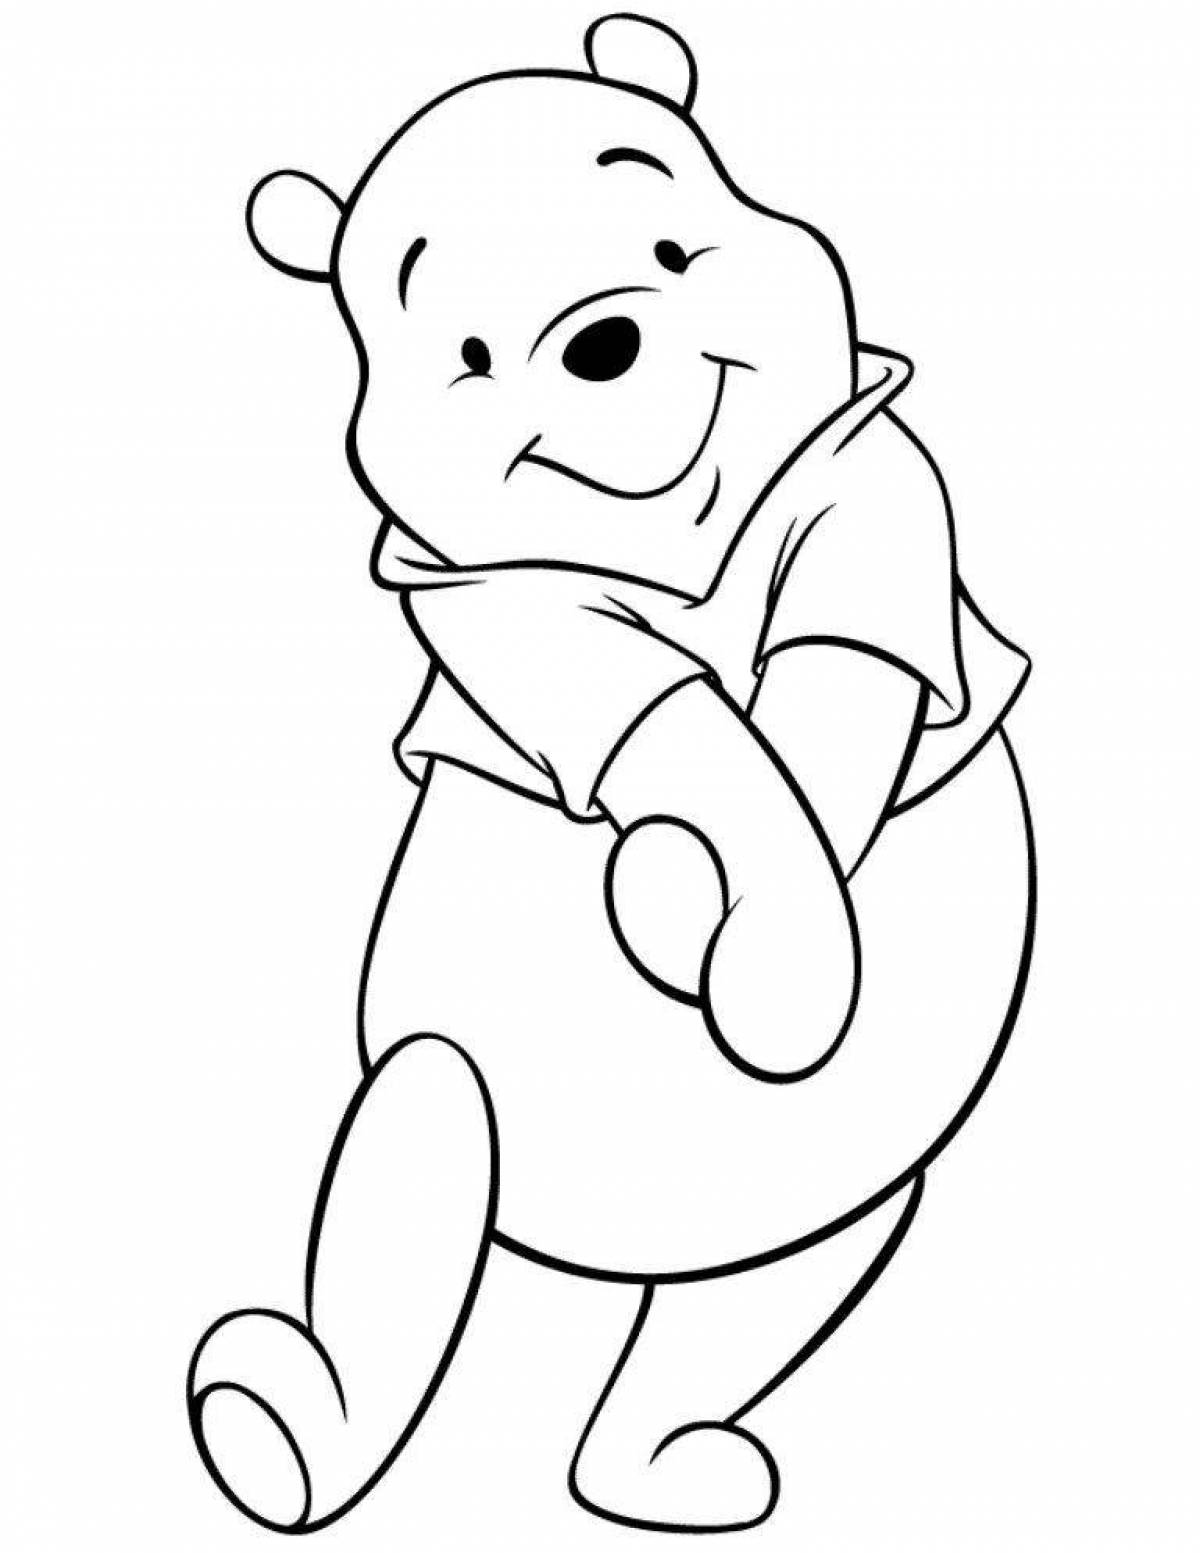 Wonderful Winnie the Pooh coloring book